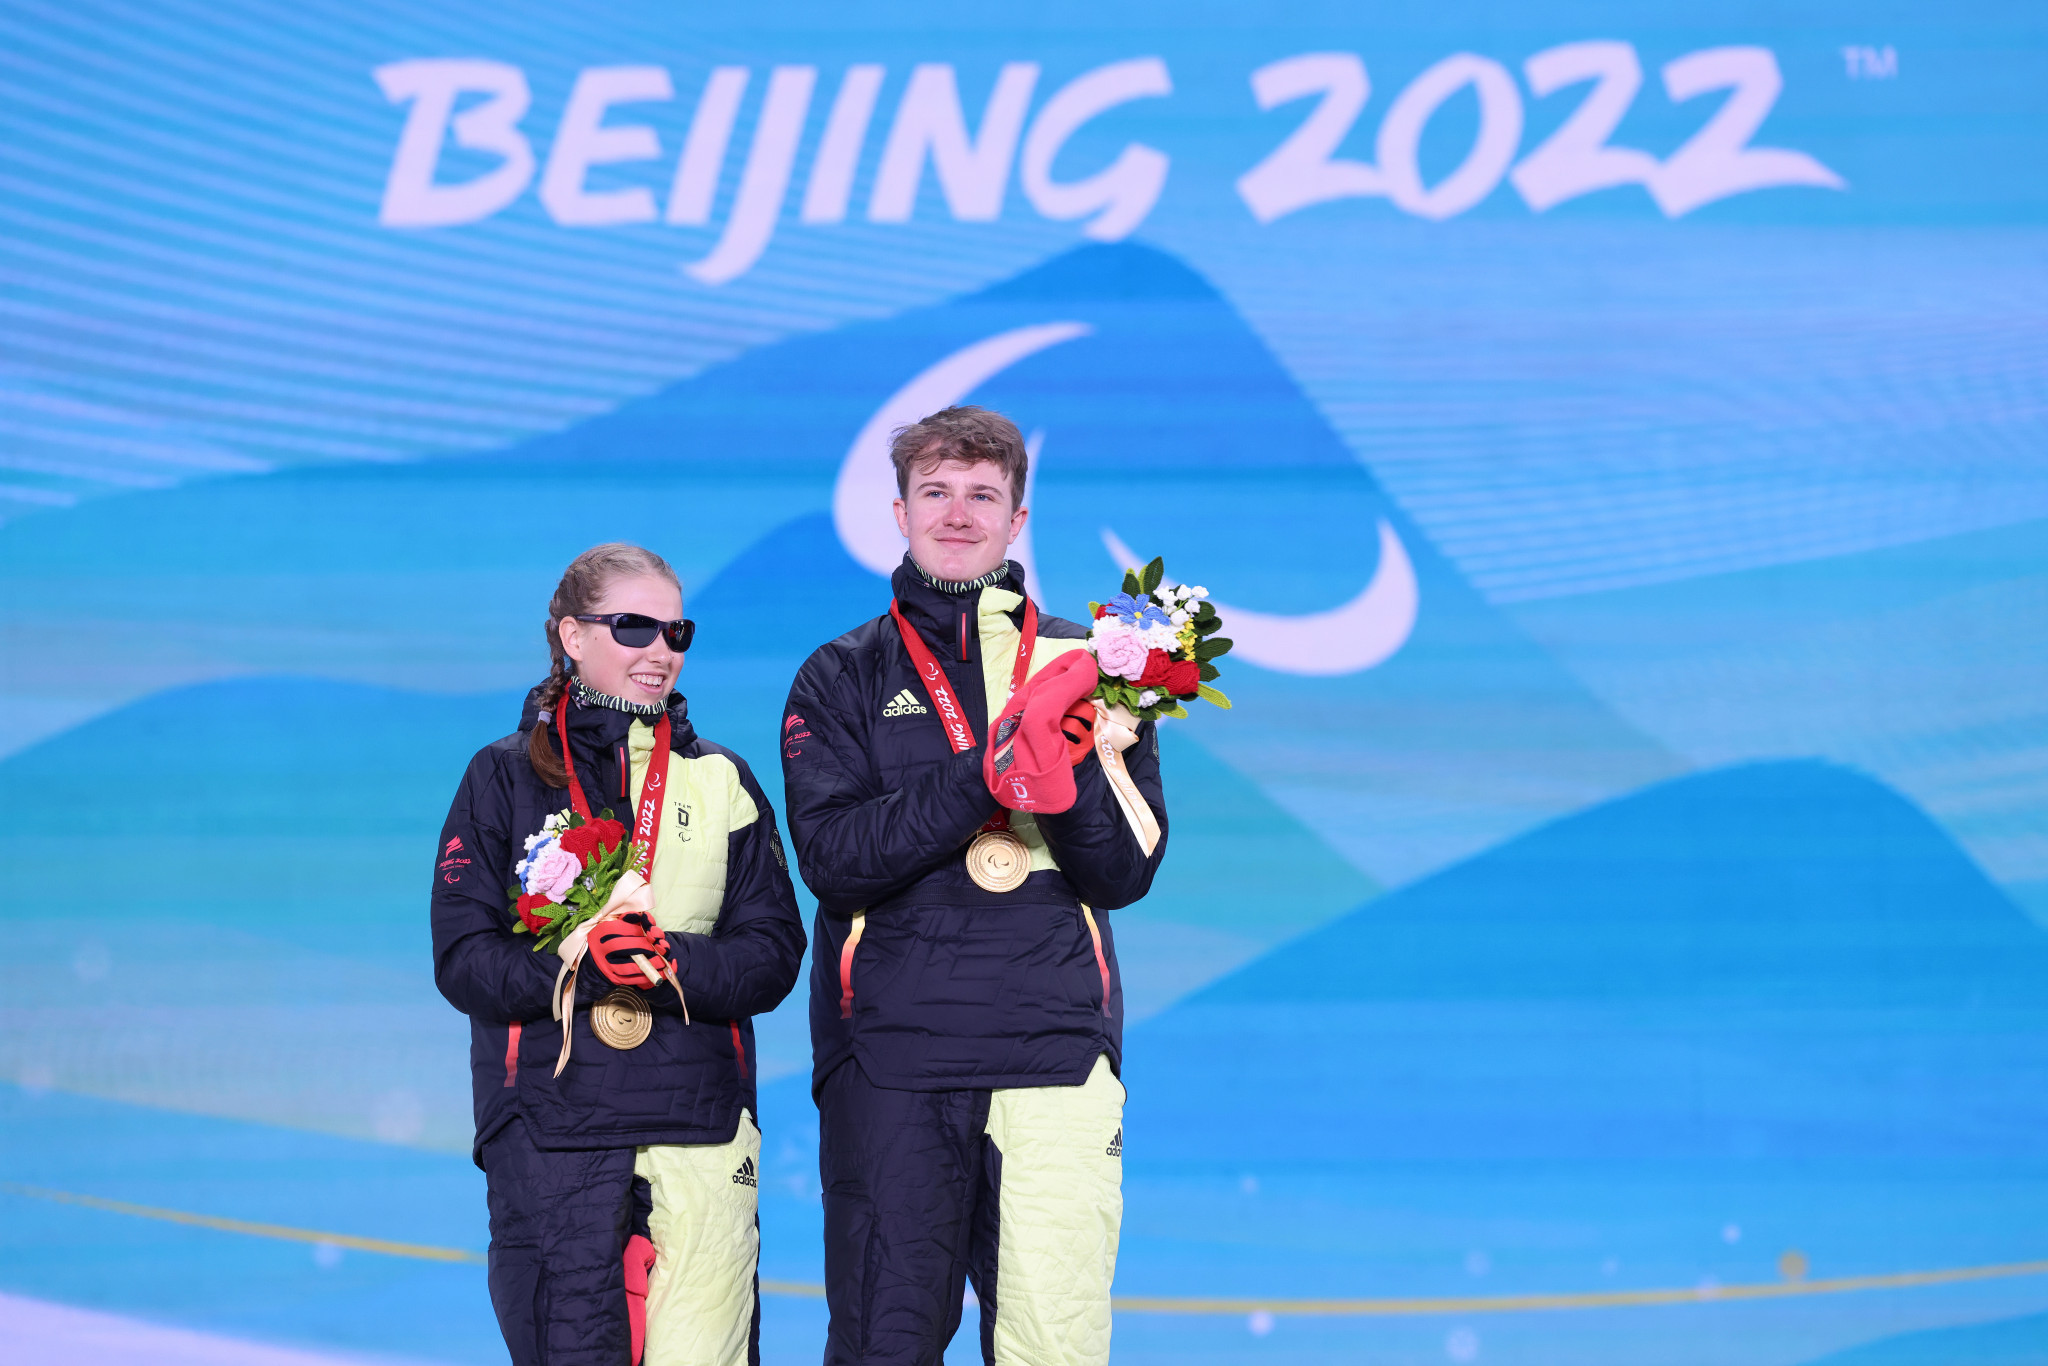 Paralympic medallist Kazmaier named DOSB’s elite student of the year 2022